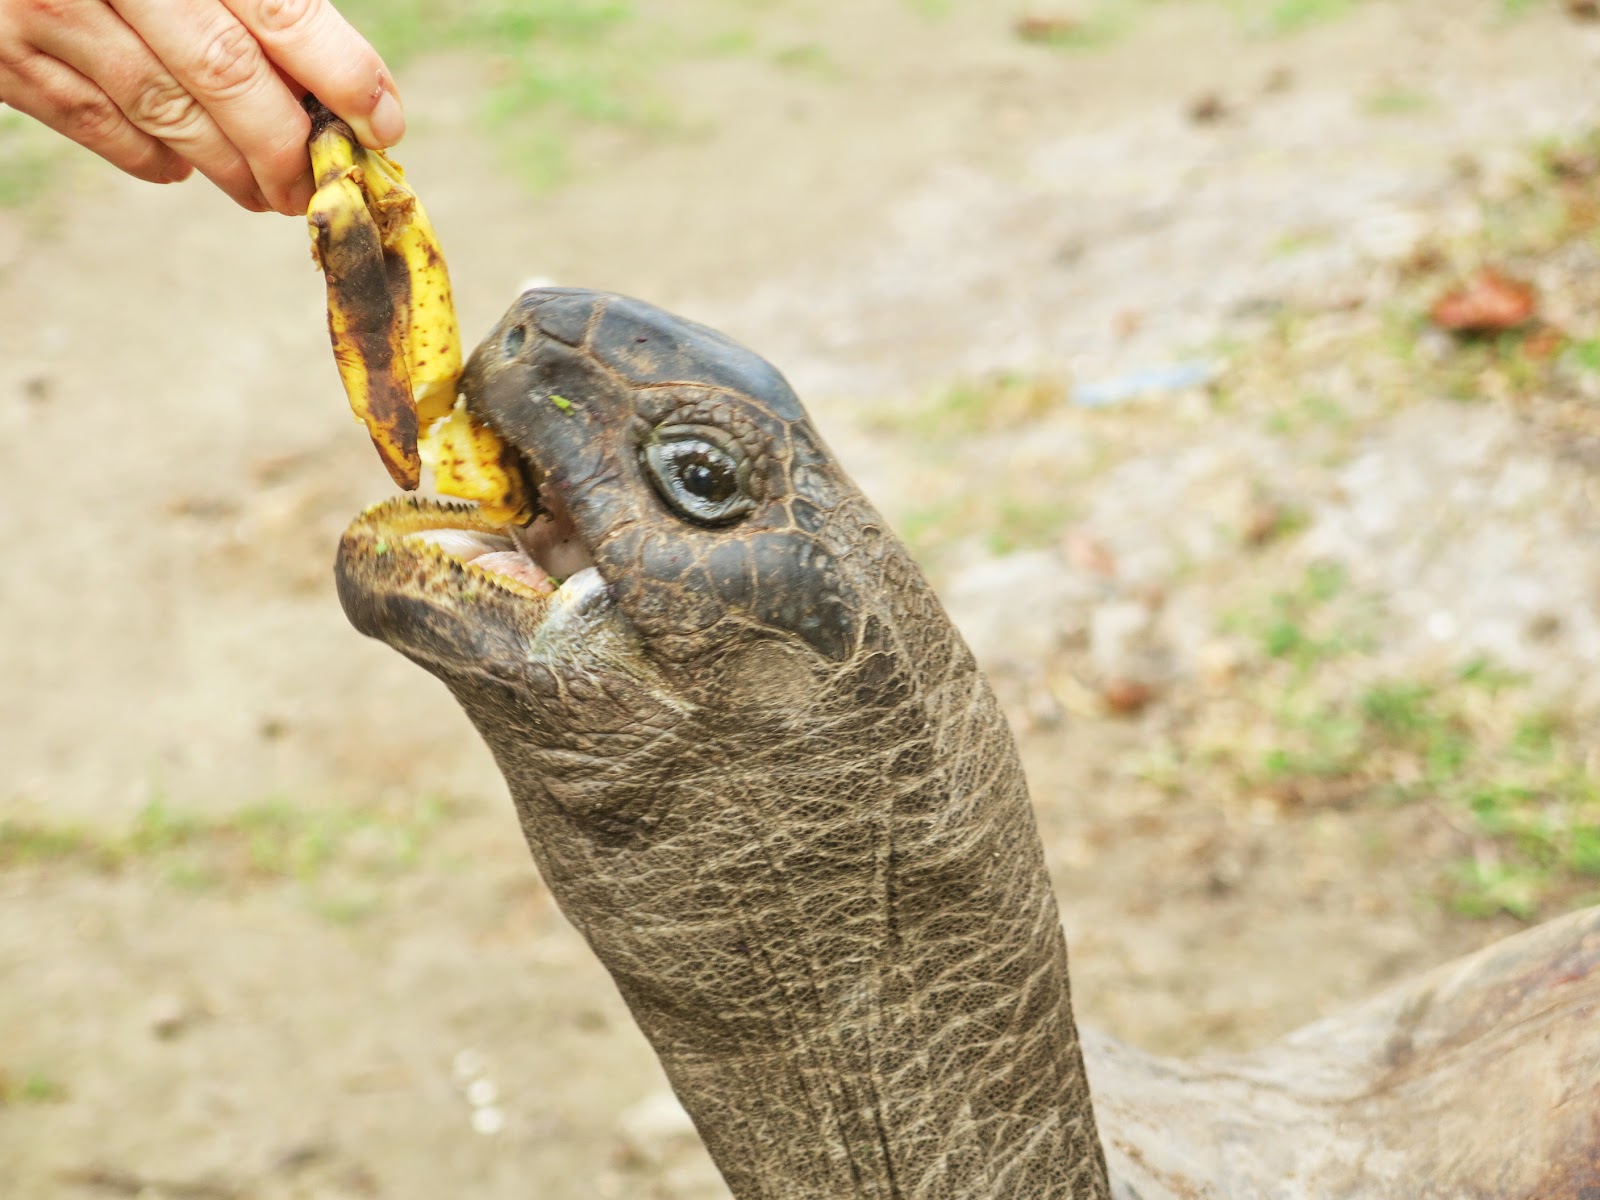 Curieuse Island på Seychellerna jättesköldpadda